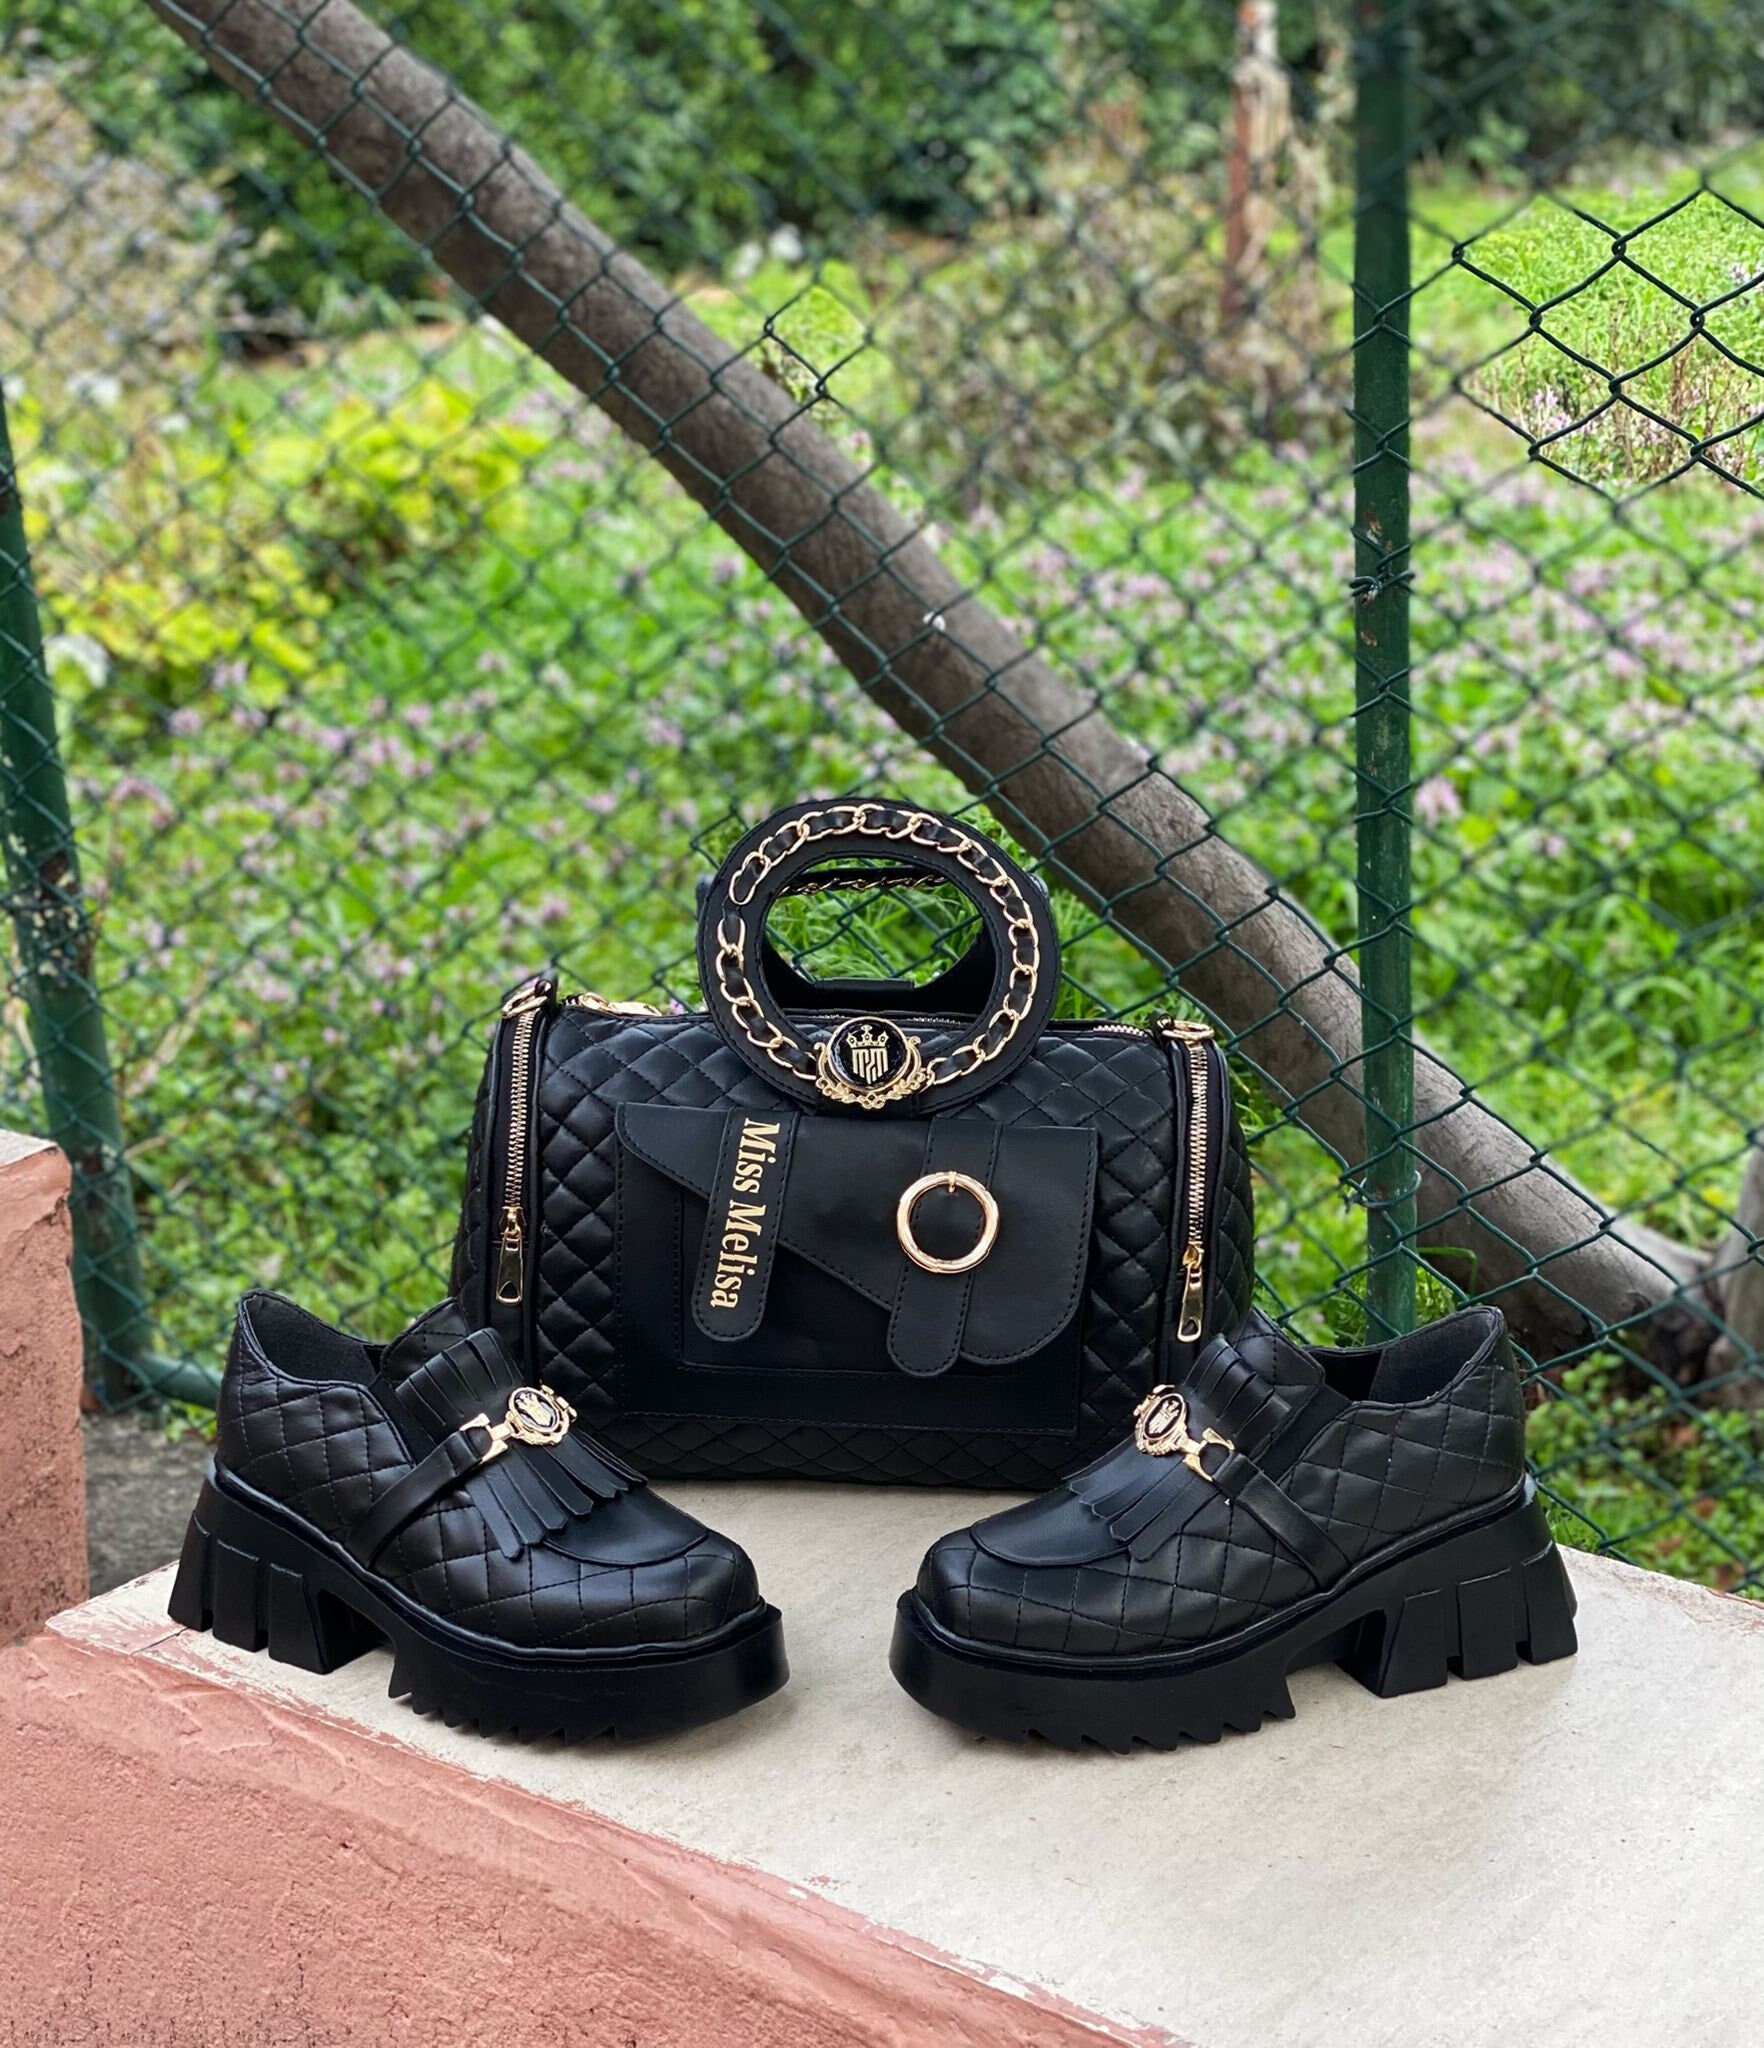 Gucci Bag & Shoe Set